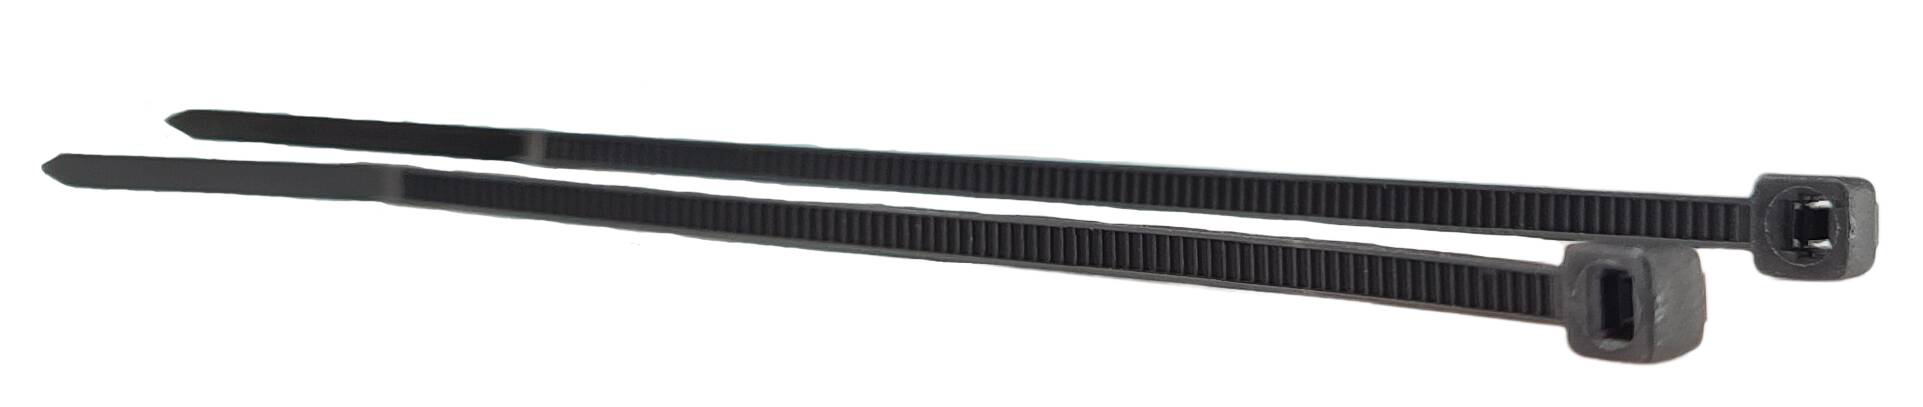 Kabelbinder 3,6x295 schwarz